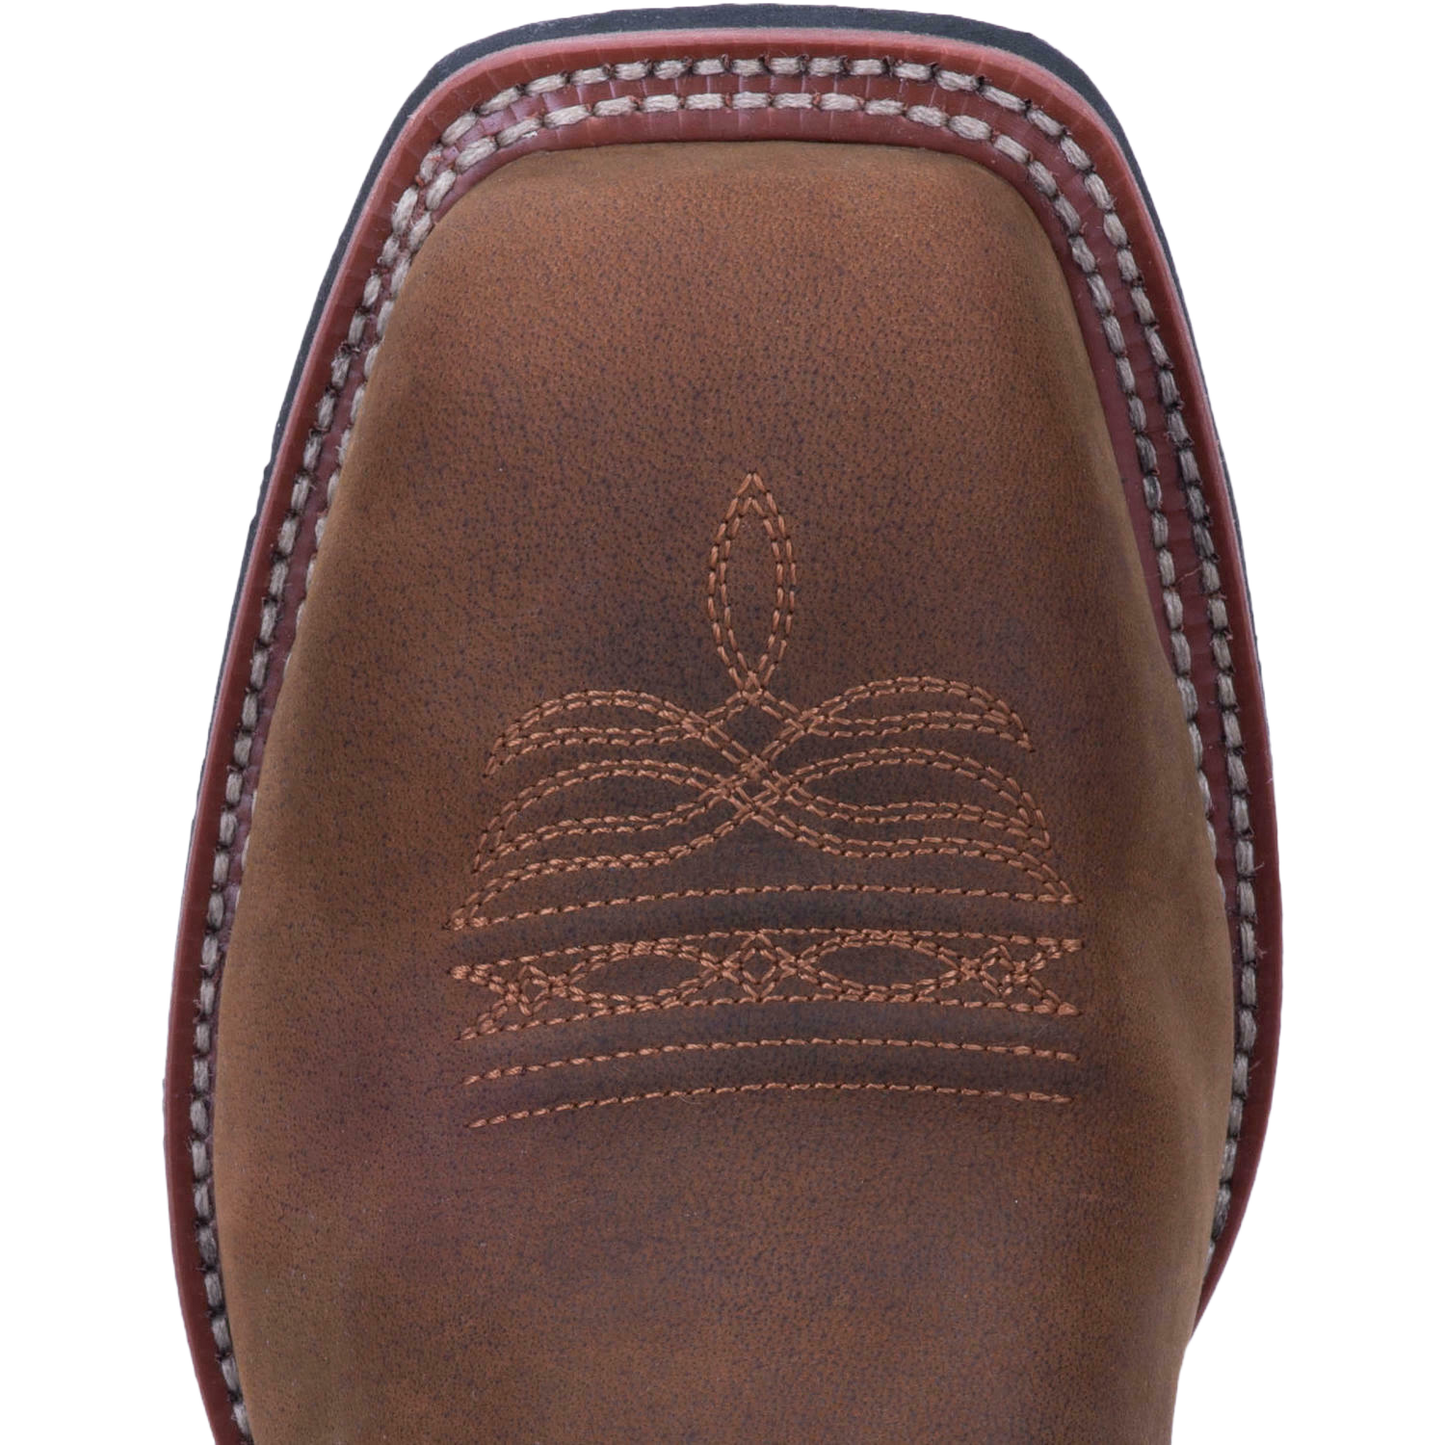 Laredo Men's Rockwell Distressed Brown & Black Square Toe Boots 69438